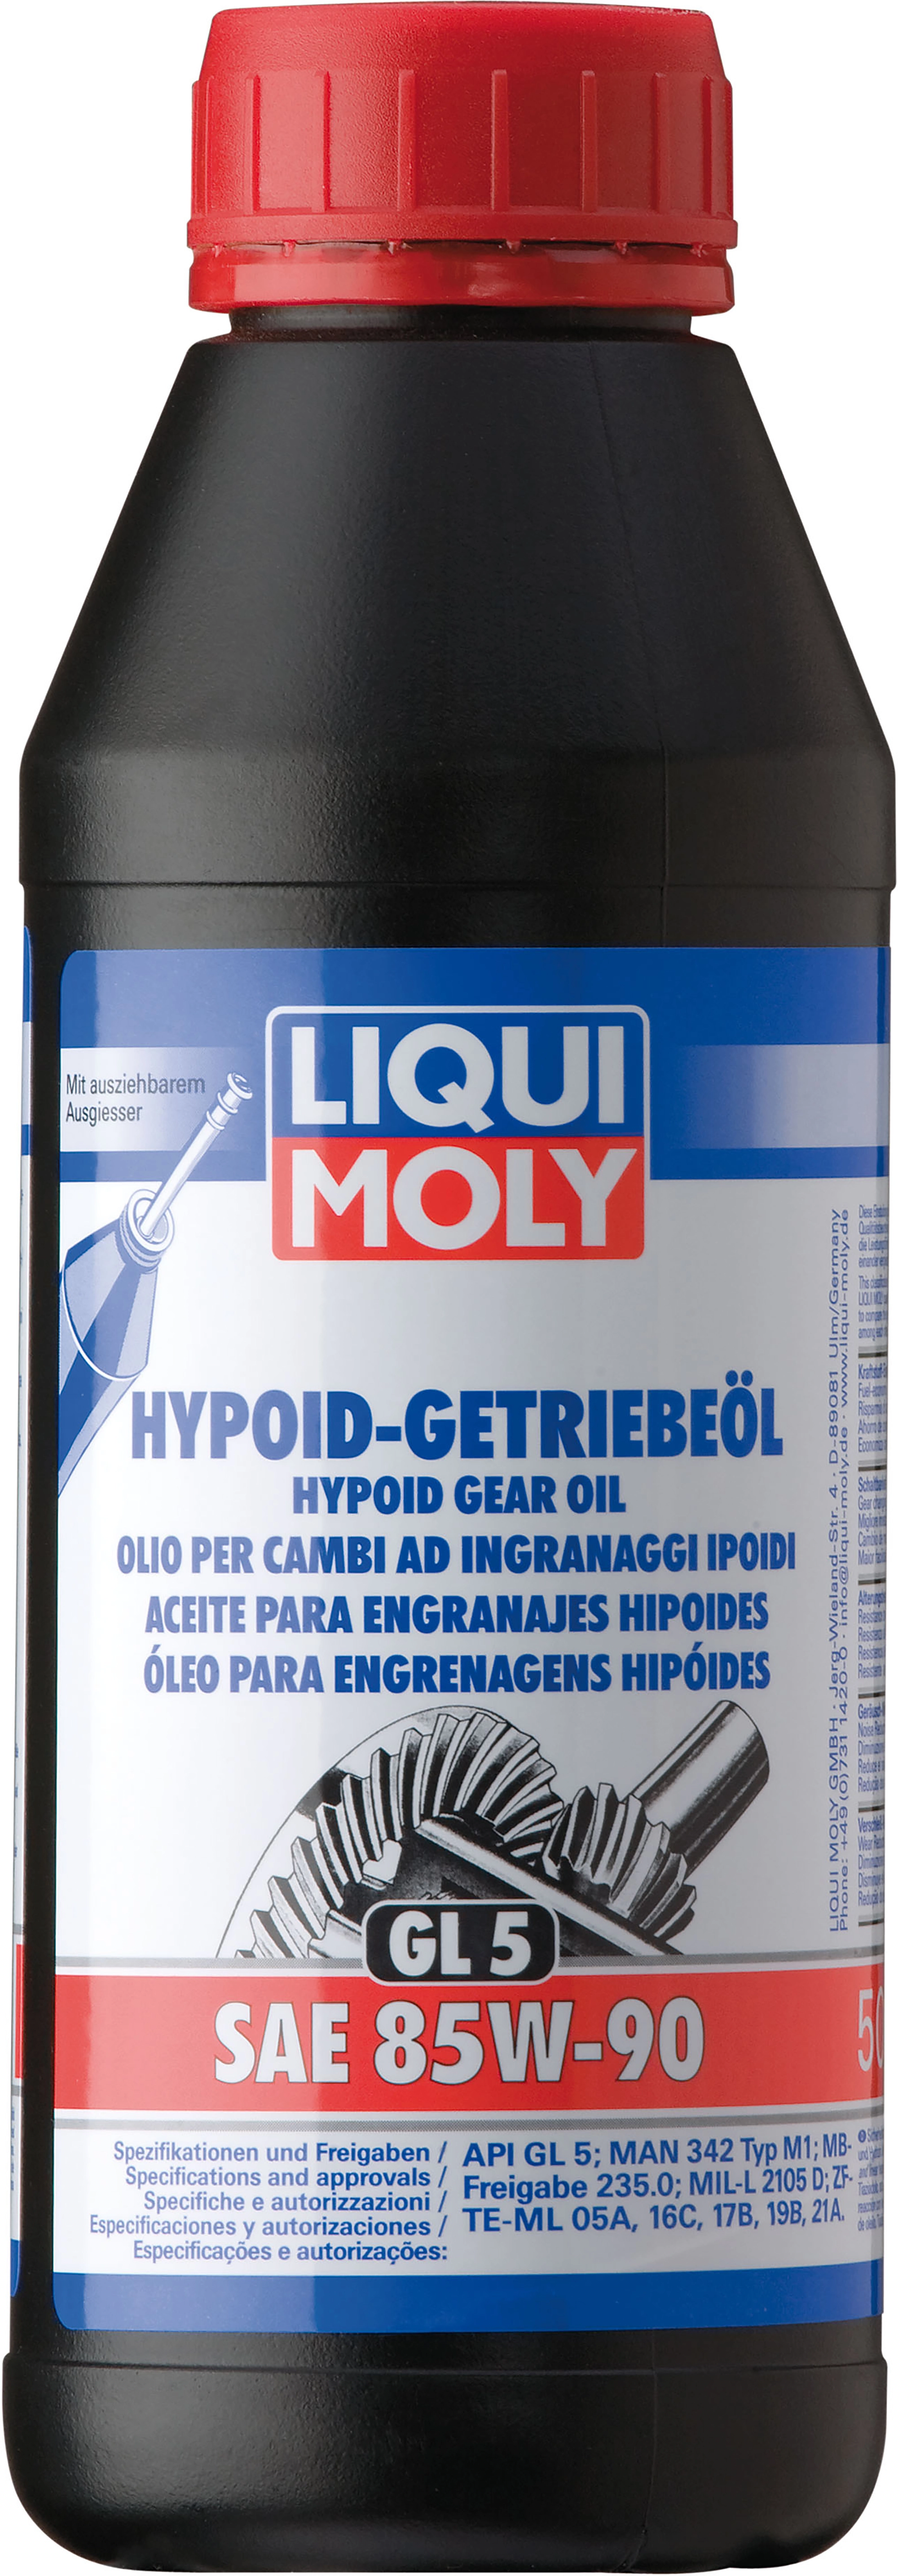 Liqui Moly Hypoid-Getriebeöl (GL 5 ) SAE 85W-90 0,5 l kaufen bei OBI